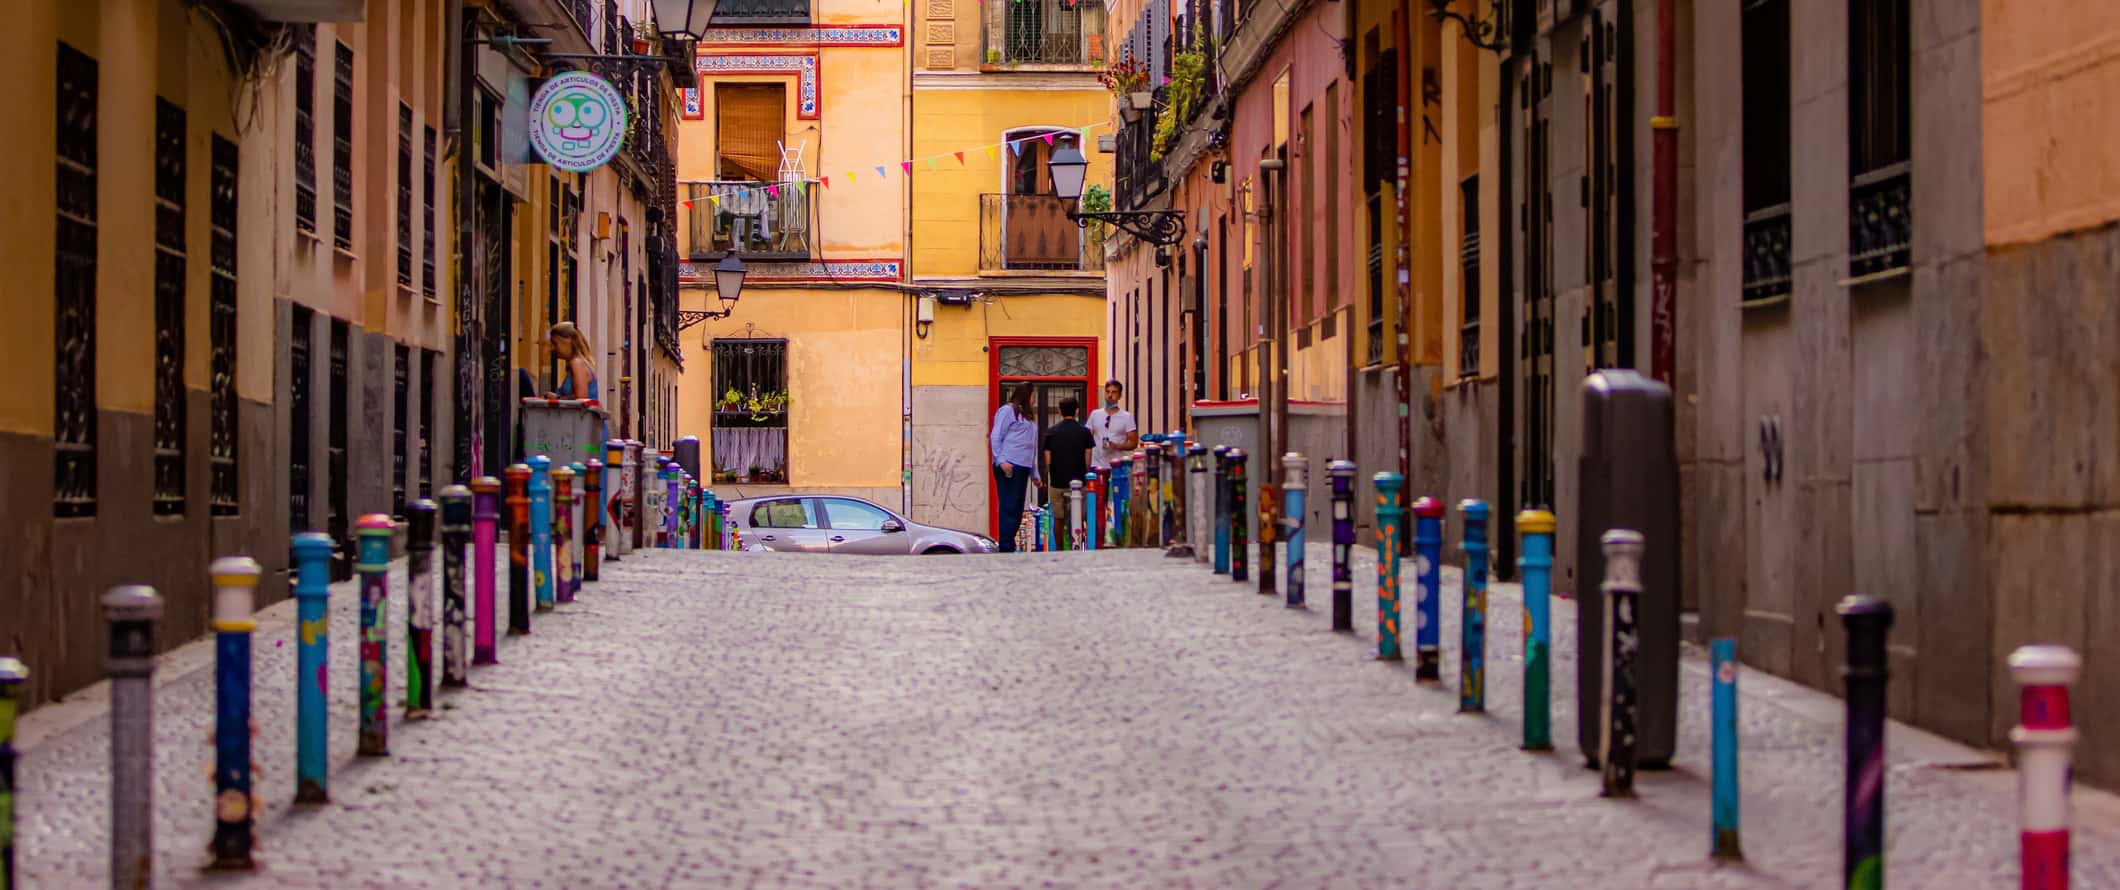 A narrow cobblestone street enveloped by old buildings in Madrid, Spain